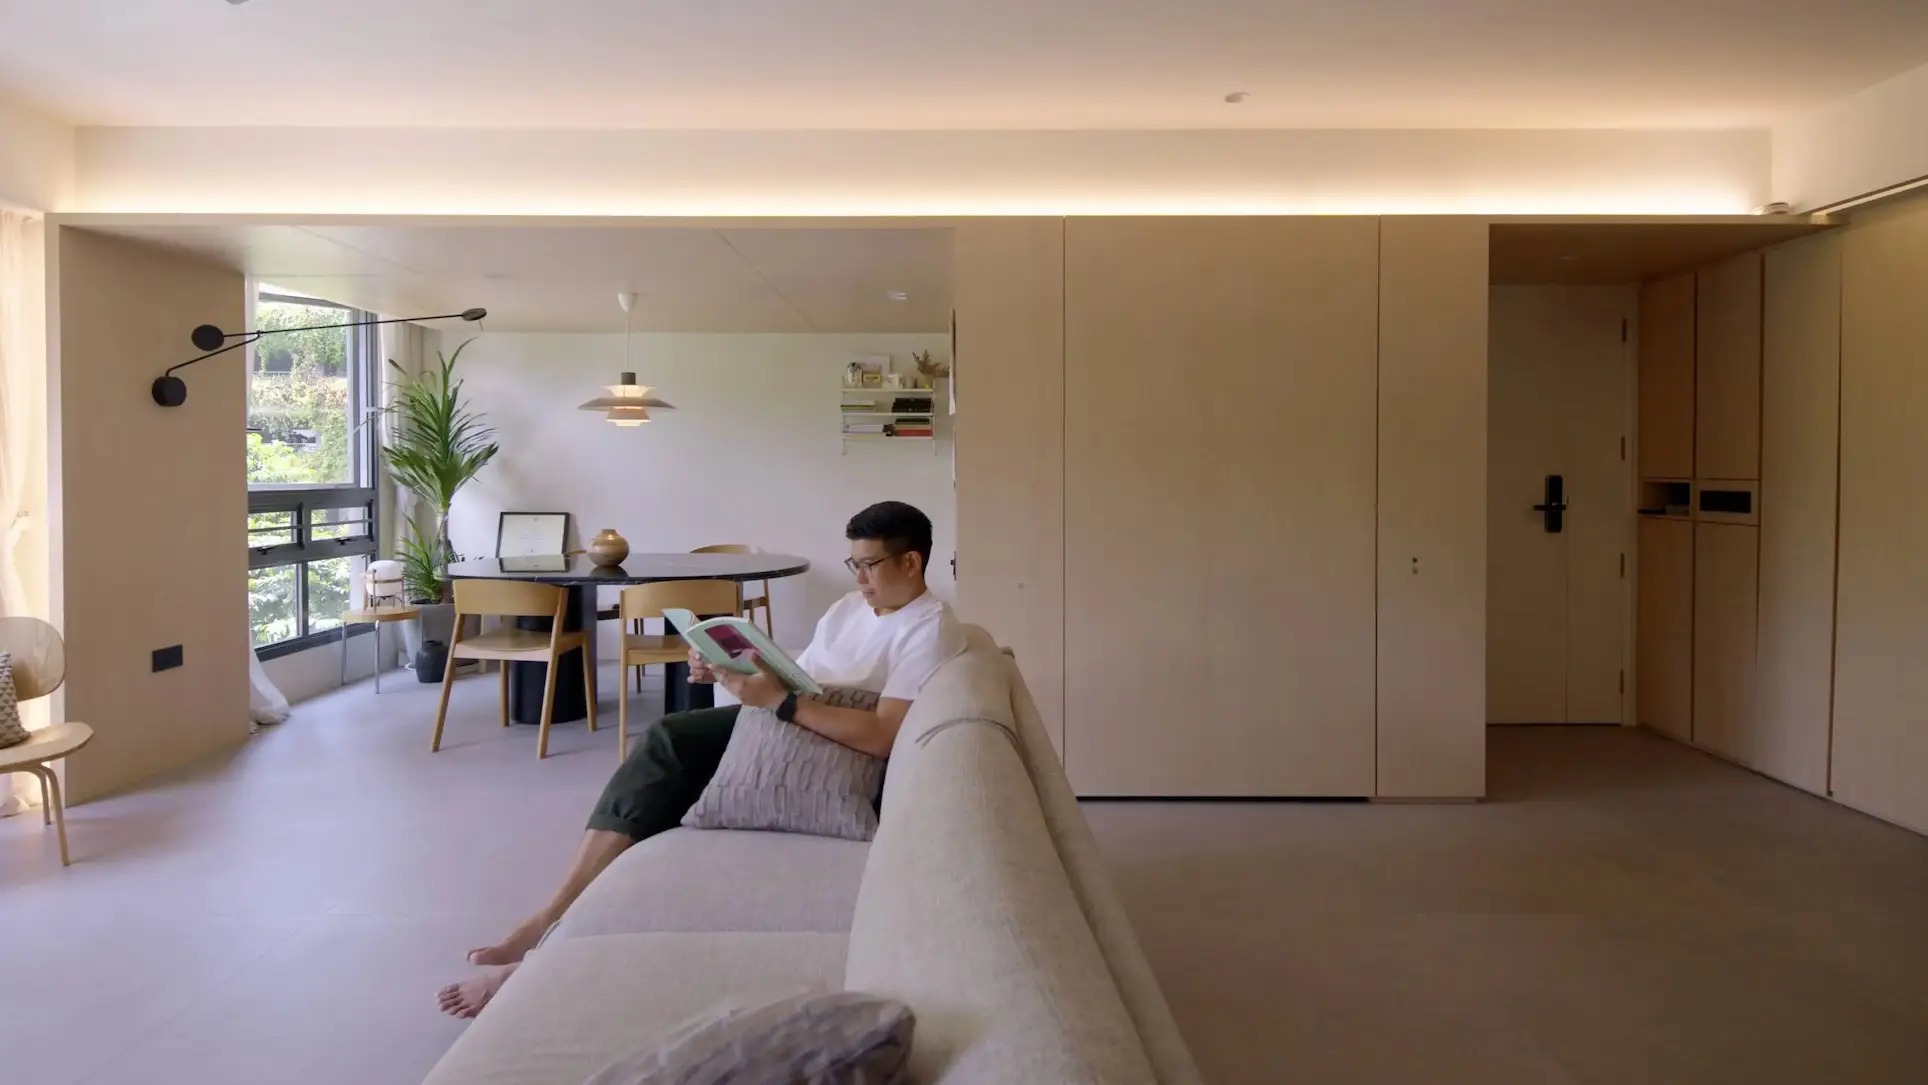 Inside A Stylish Minimalist Home Designed To Be Kid Friendly No Watermark1